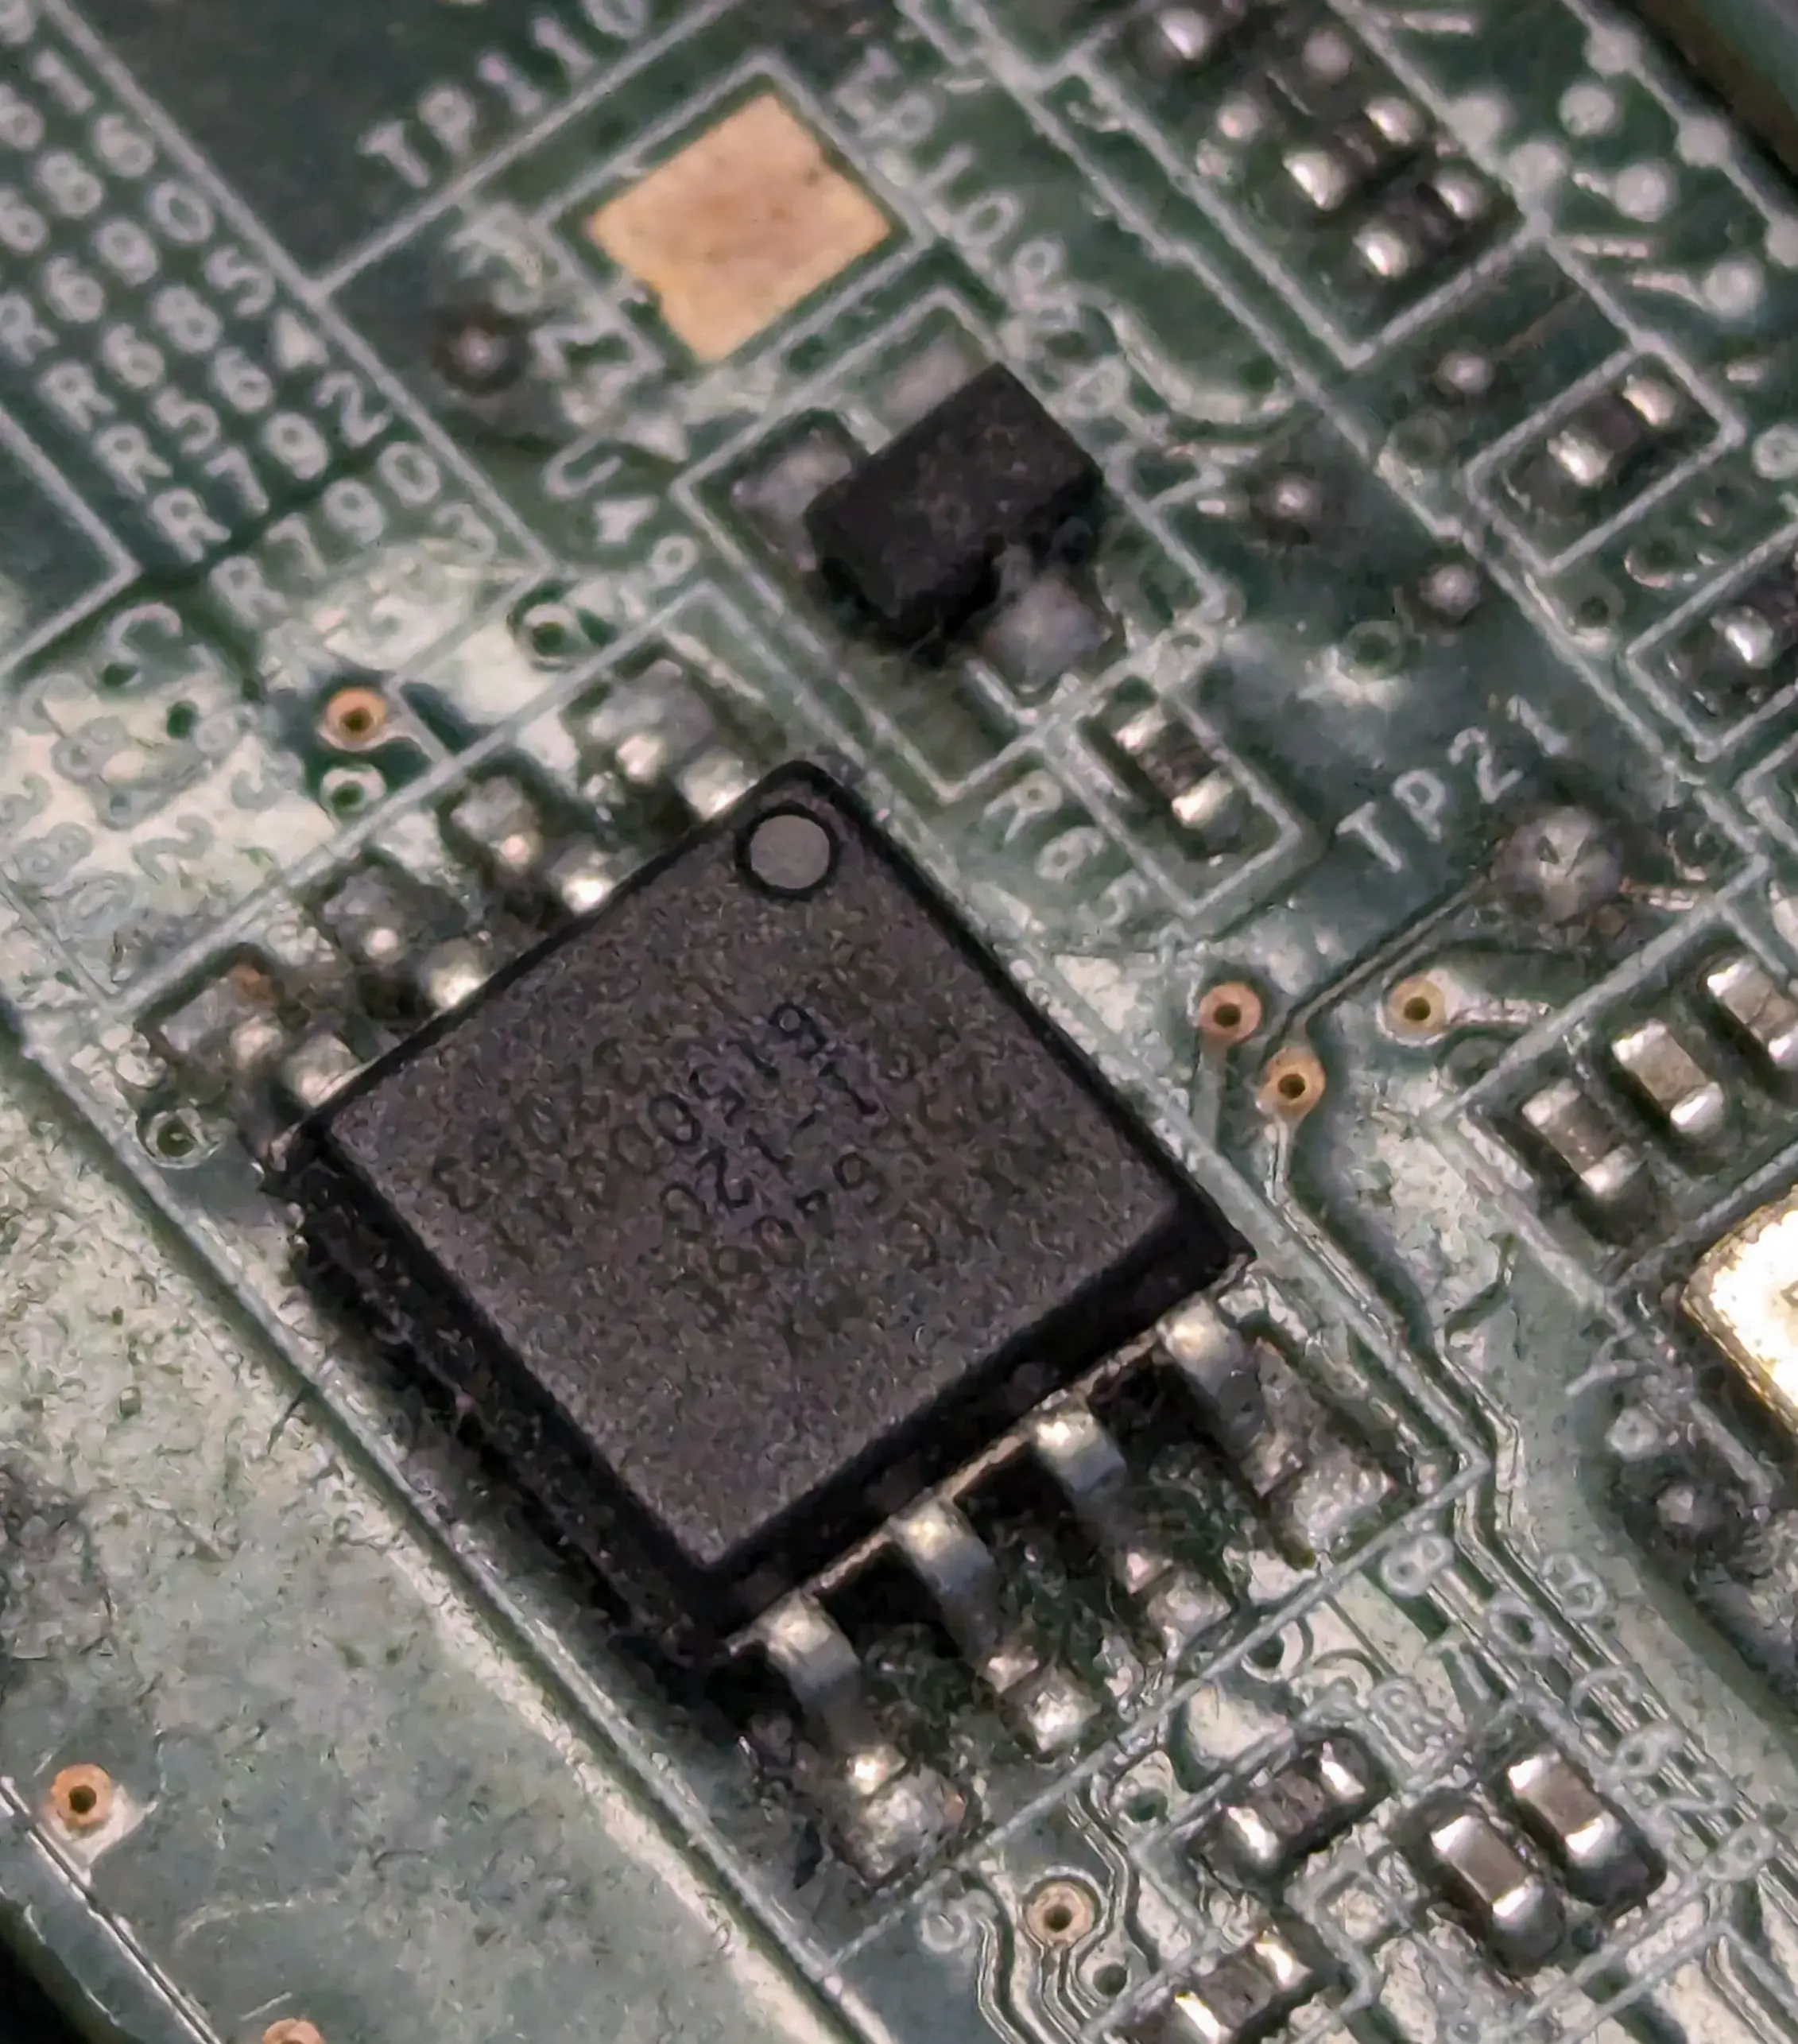 T420 BIOS chip